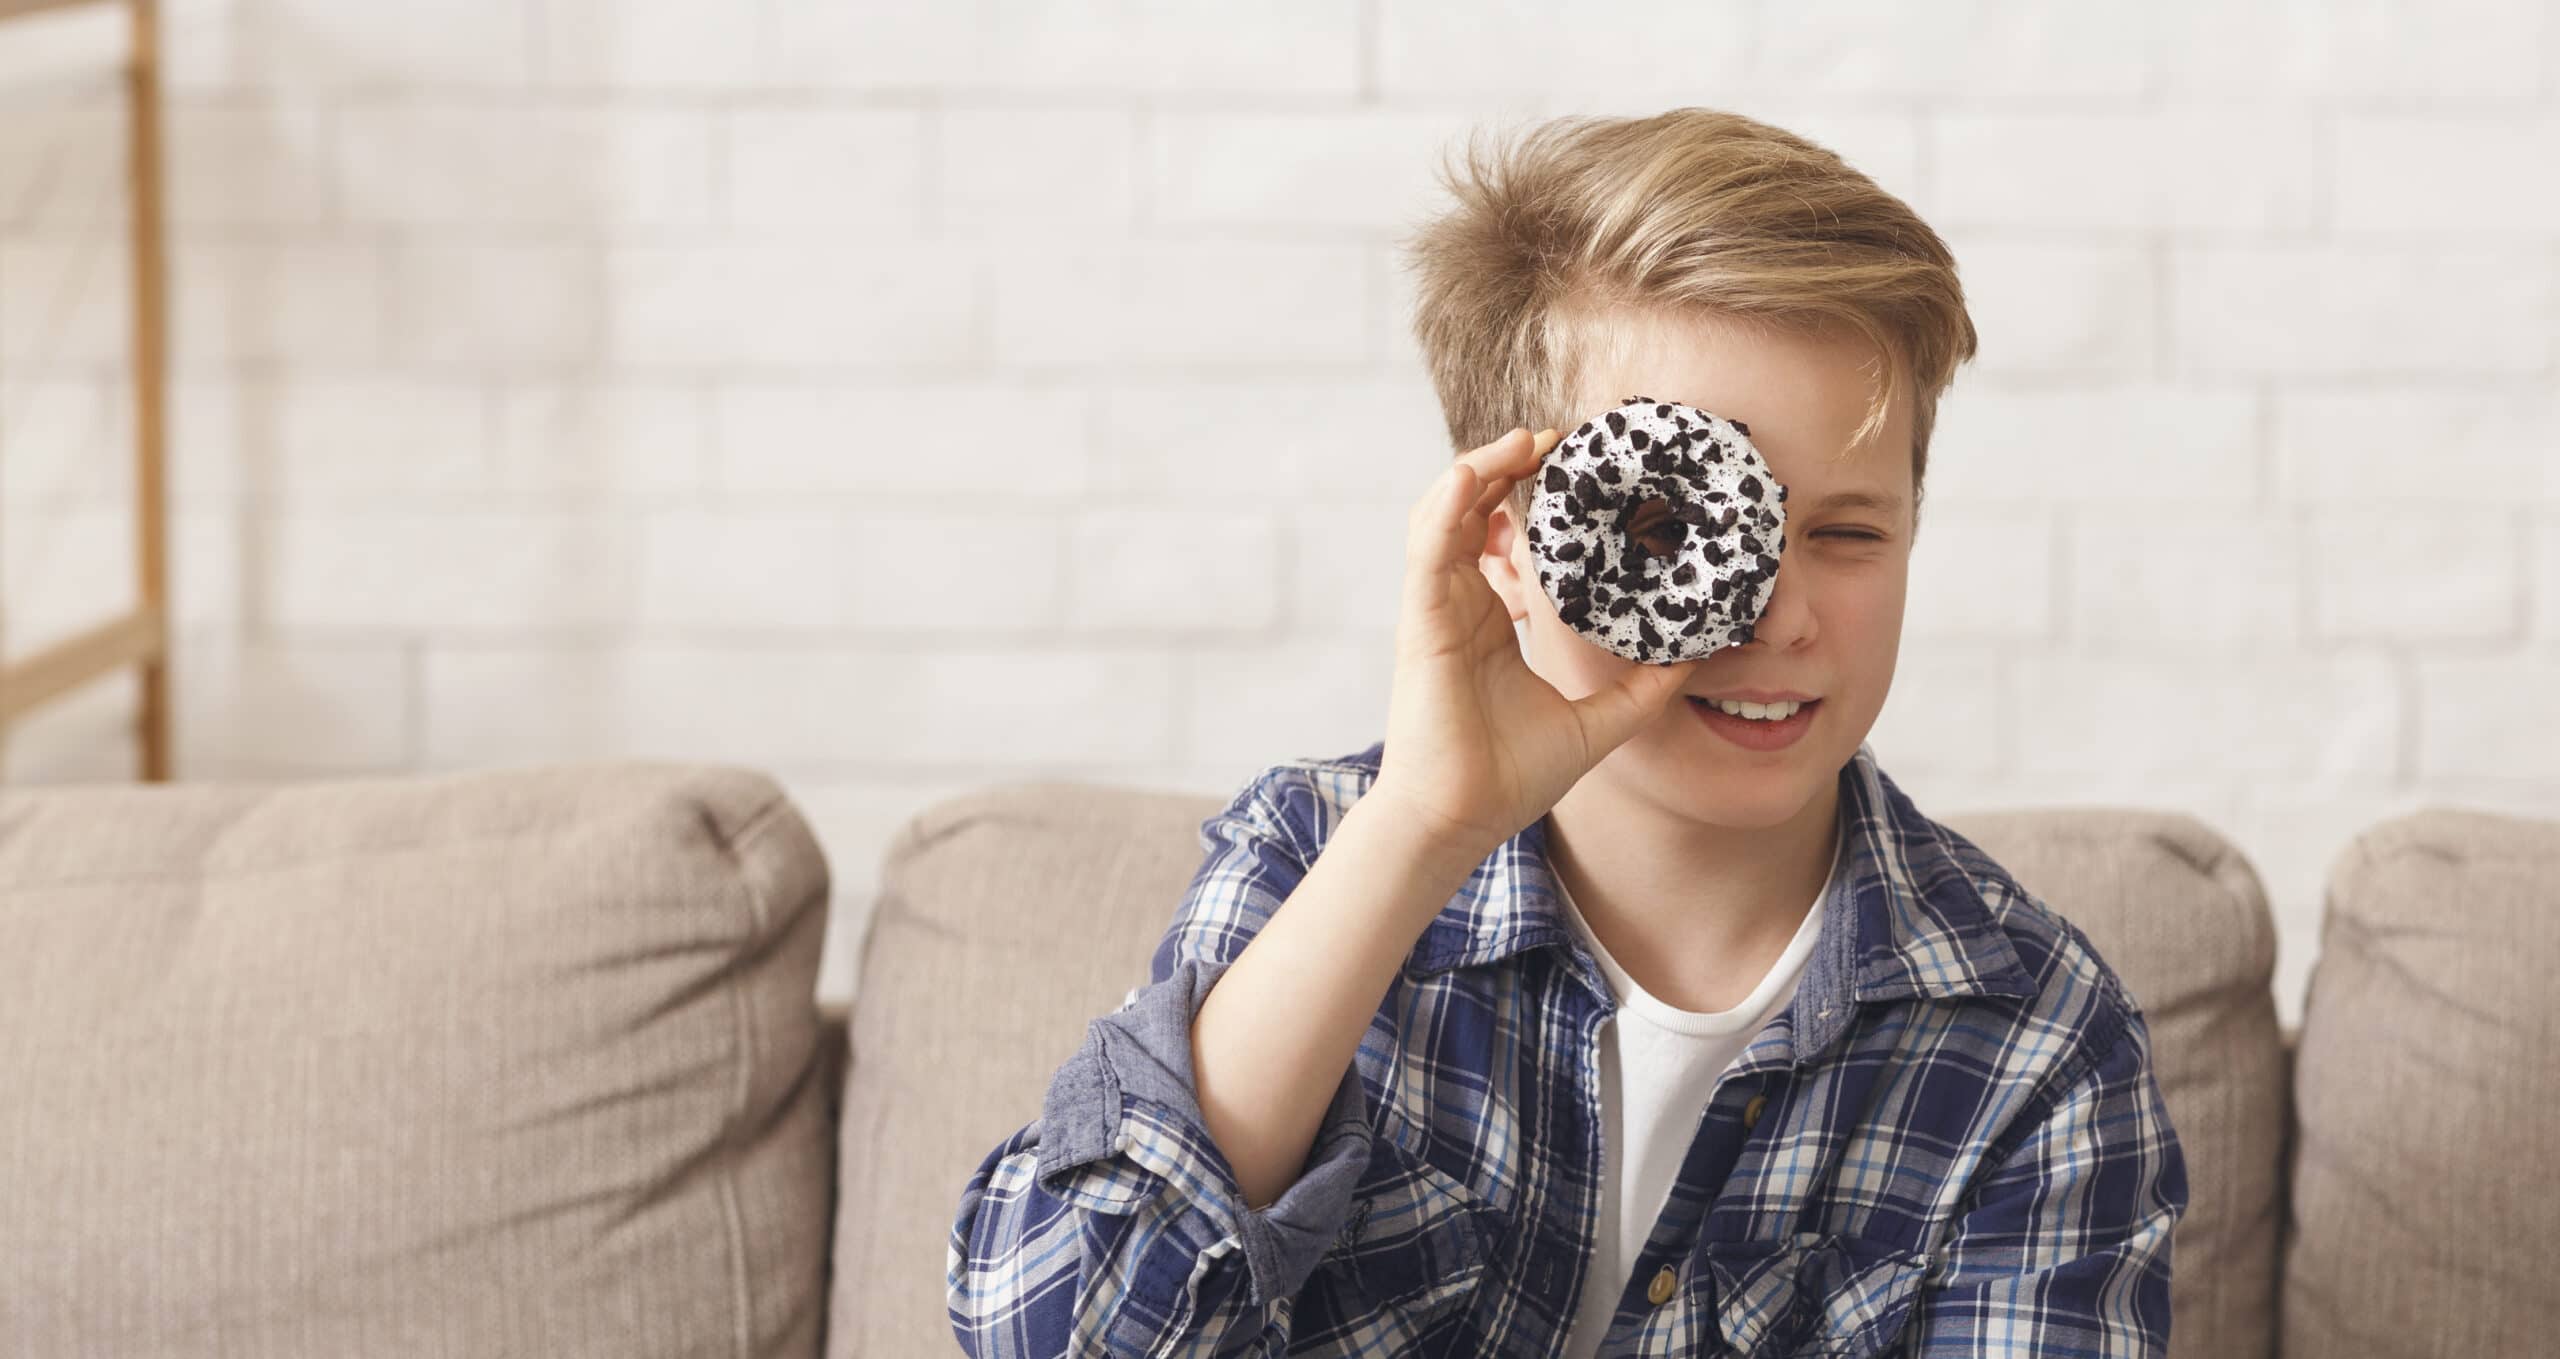 Boy Holding Doughnut Near Eye Posing Sitting On Couch, Panorama